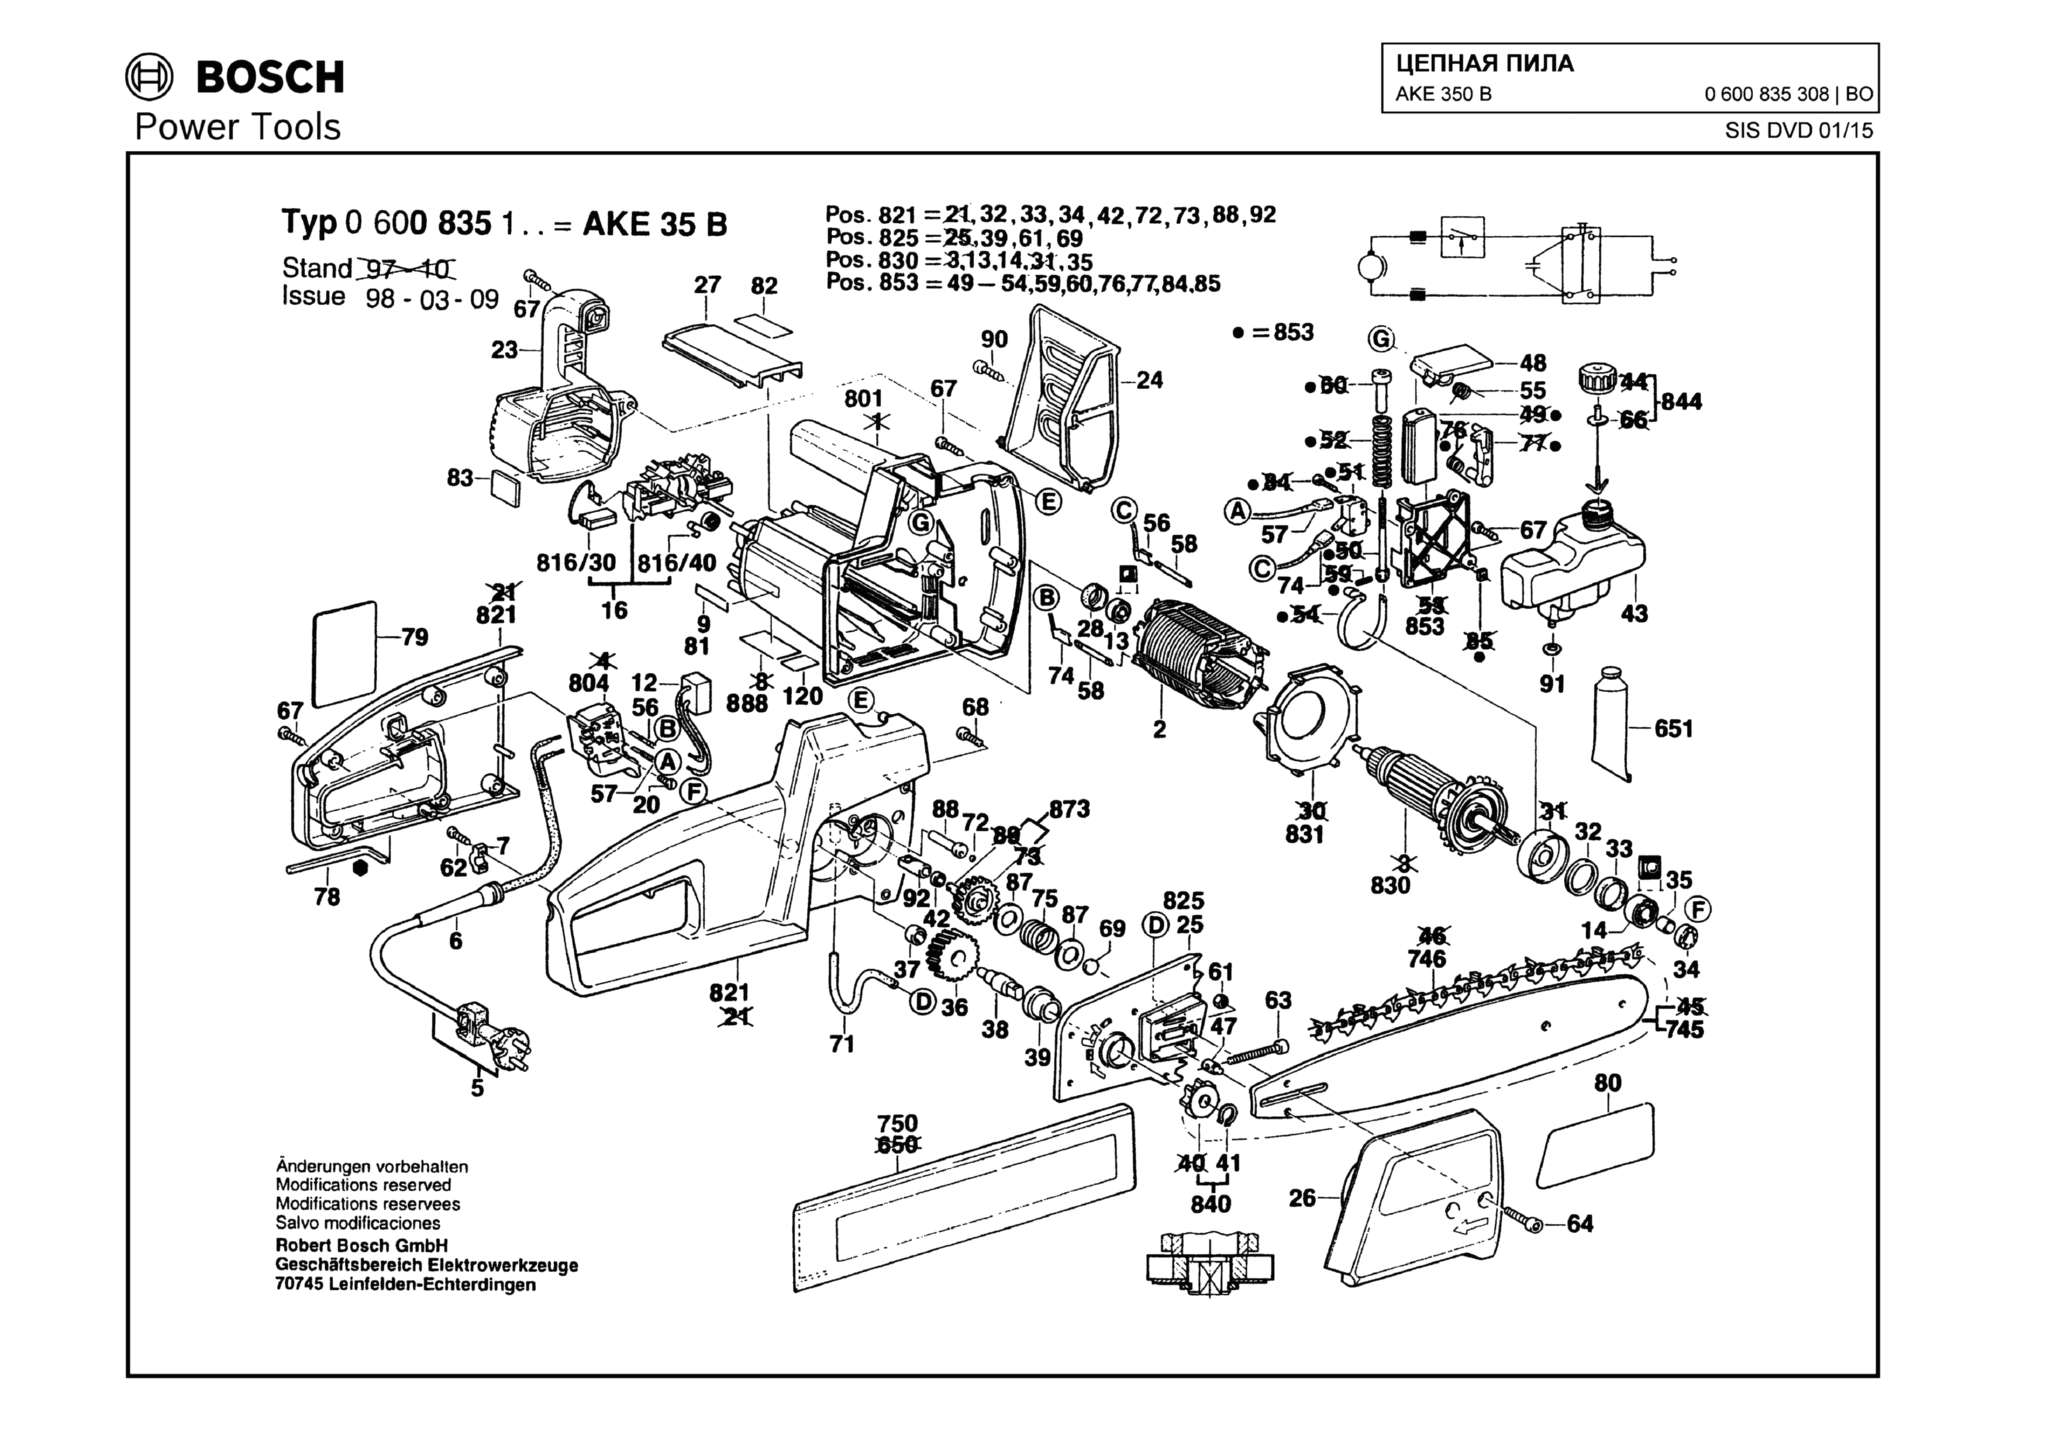 Запчасти, схема и деталировка Bosch AKE 350 B (ТИП 0600835308)